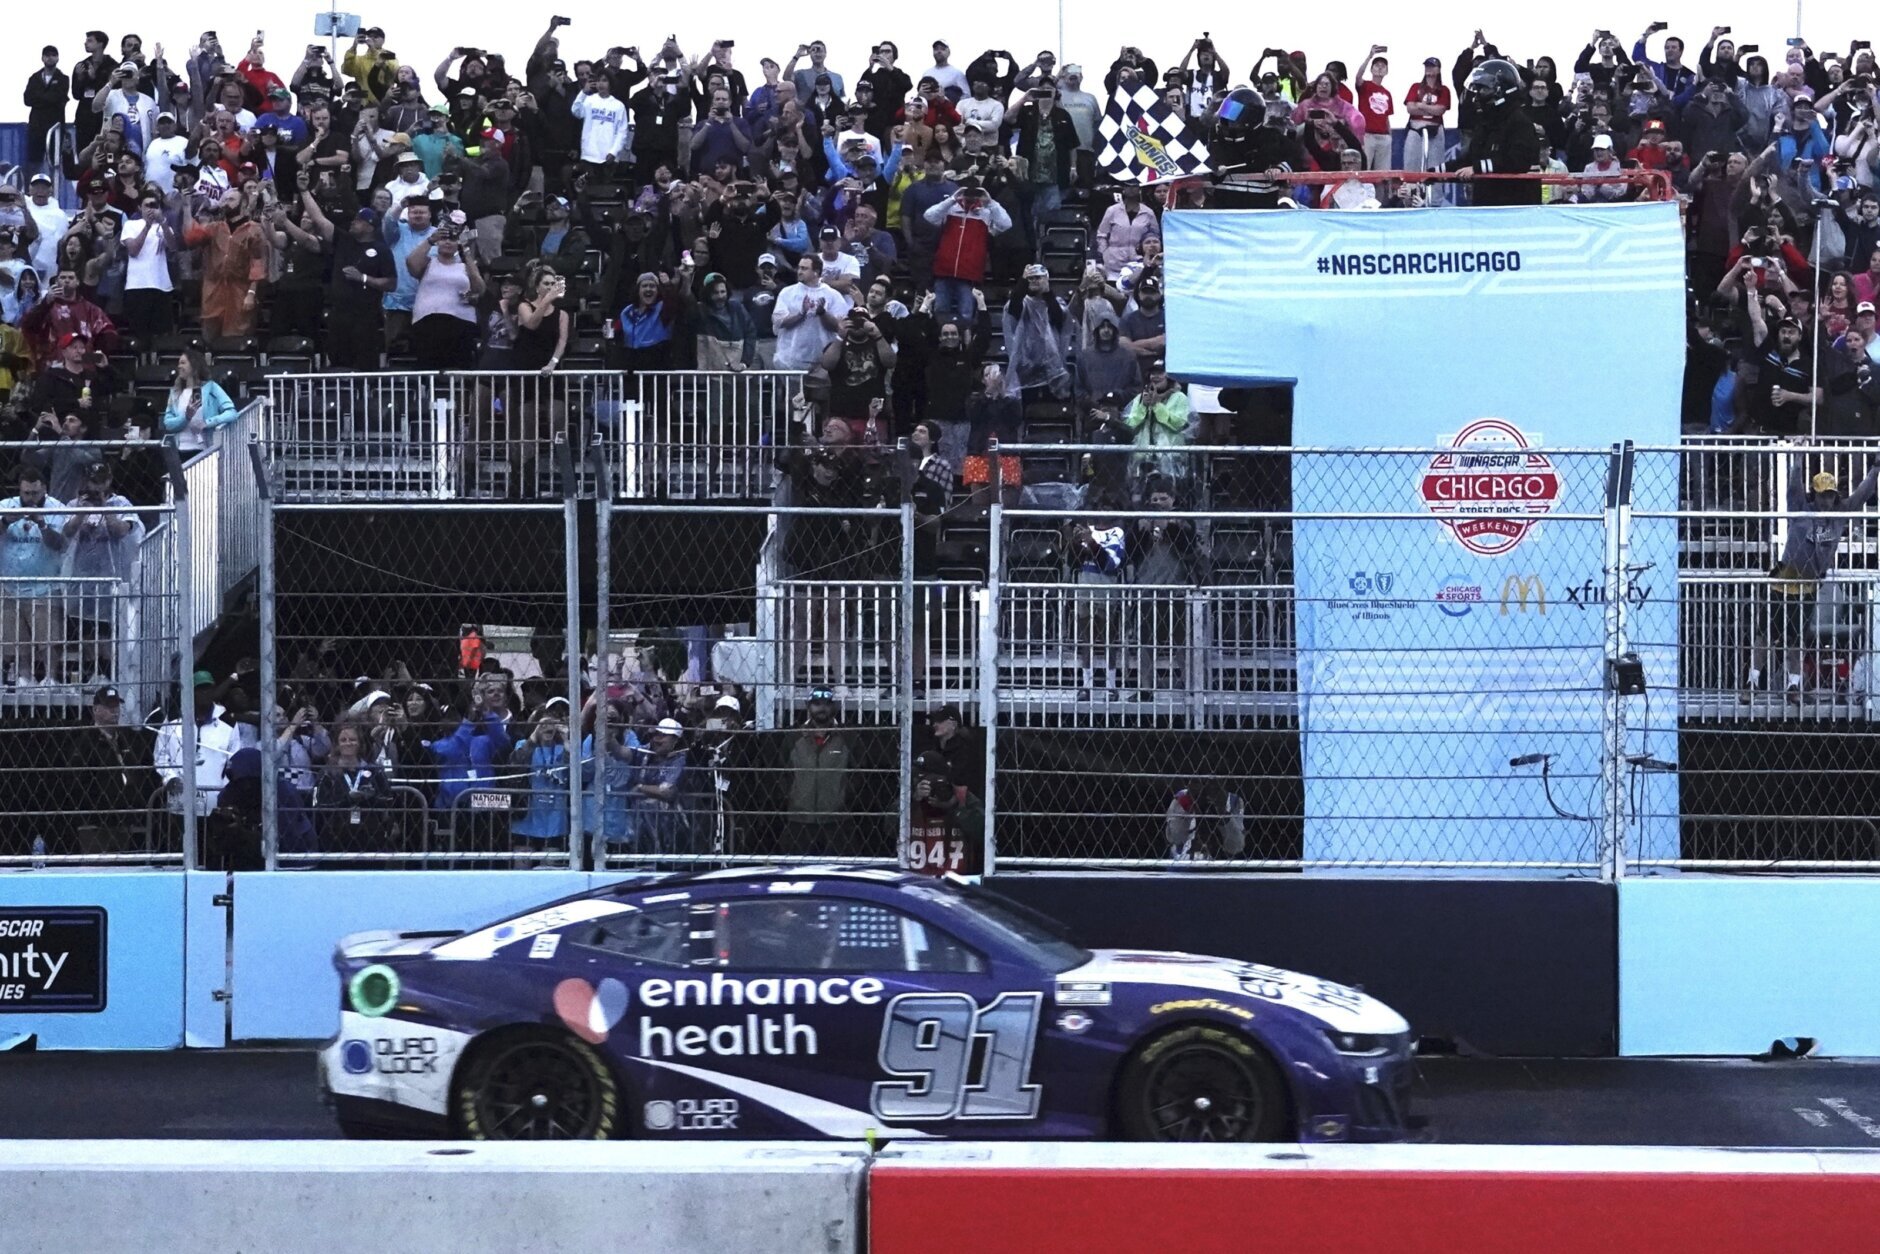 Shane van Gisbergen wins his NASCAR Cup Series debut in memorable finish to series 1st street race